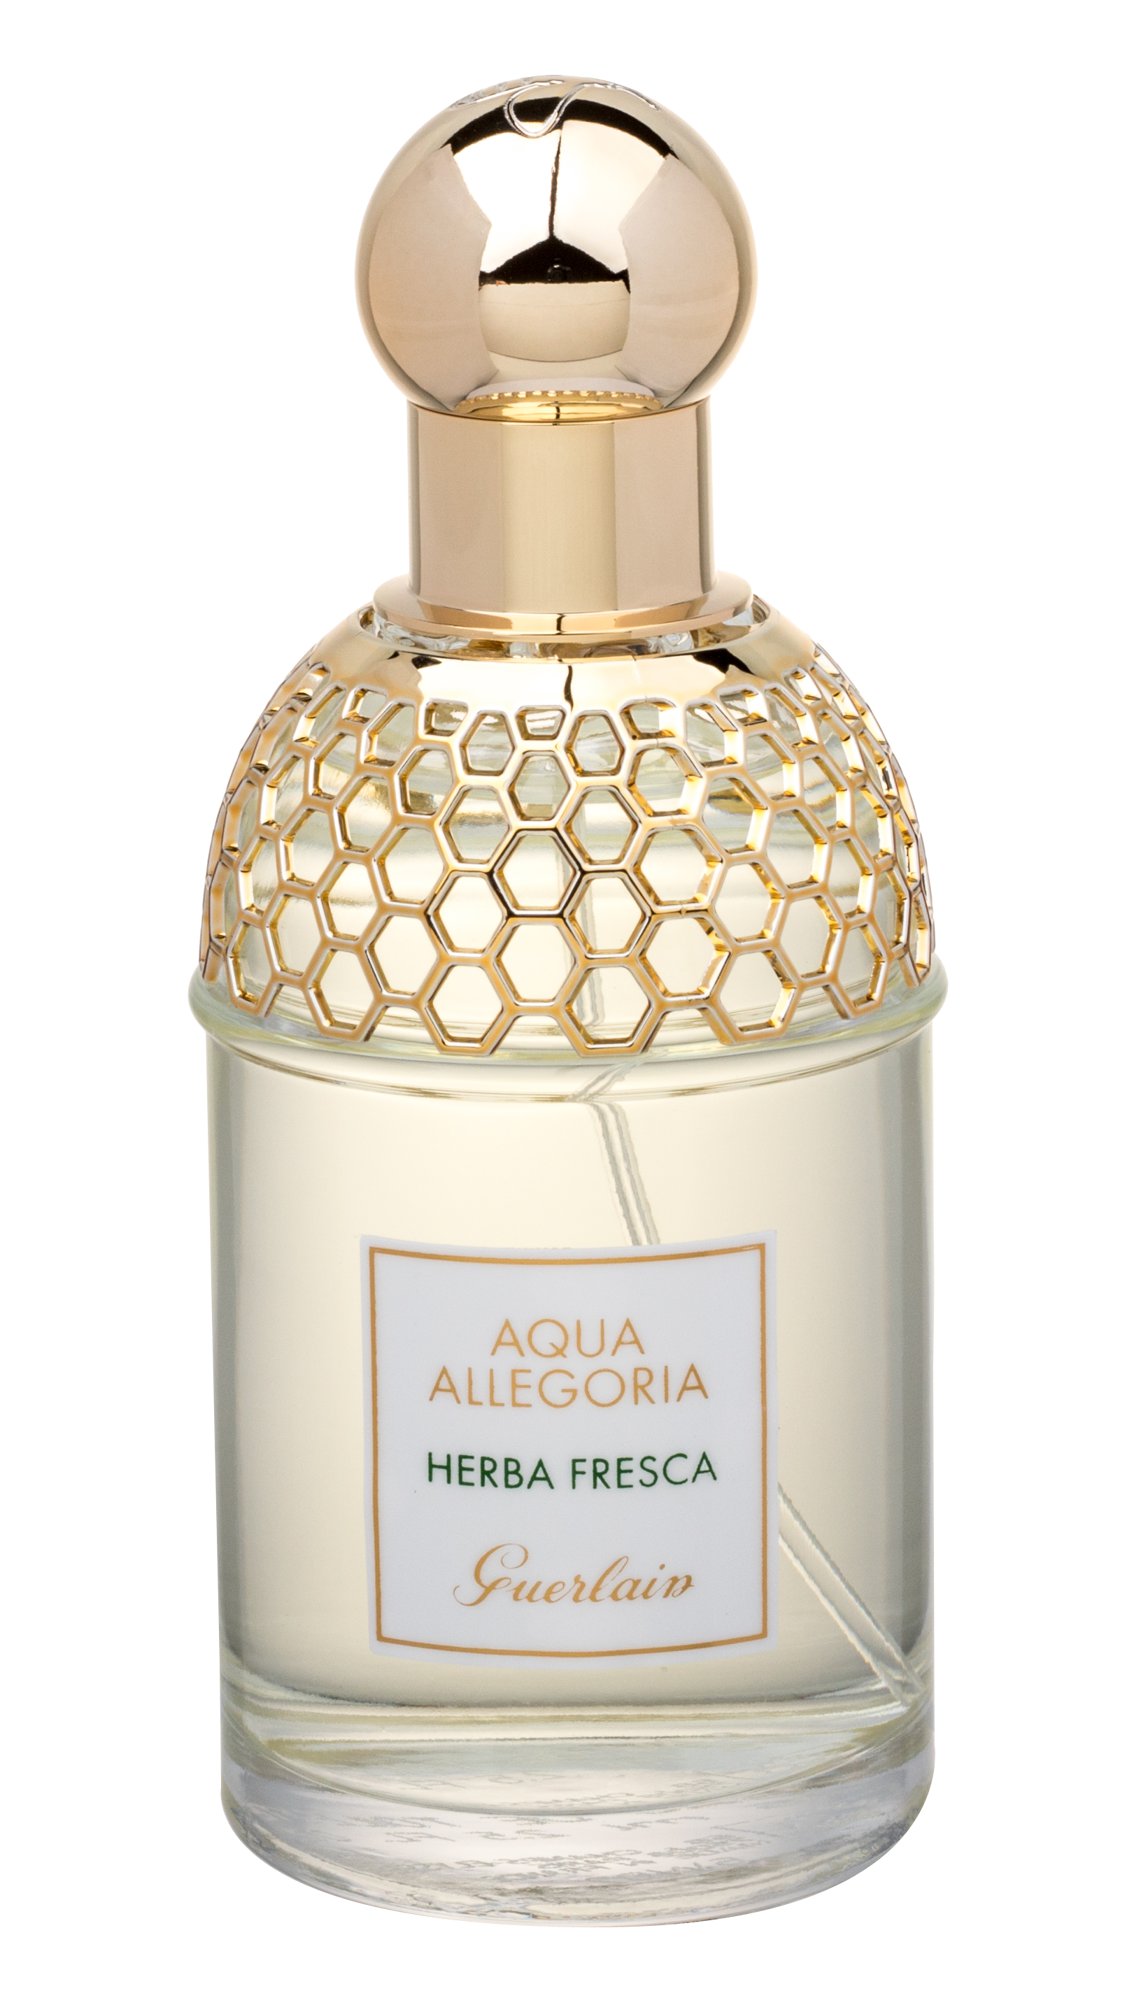 Guerlain Aqua Allegoria Herba Fresca, Toaletní voda 75ml